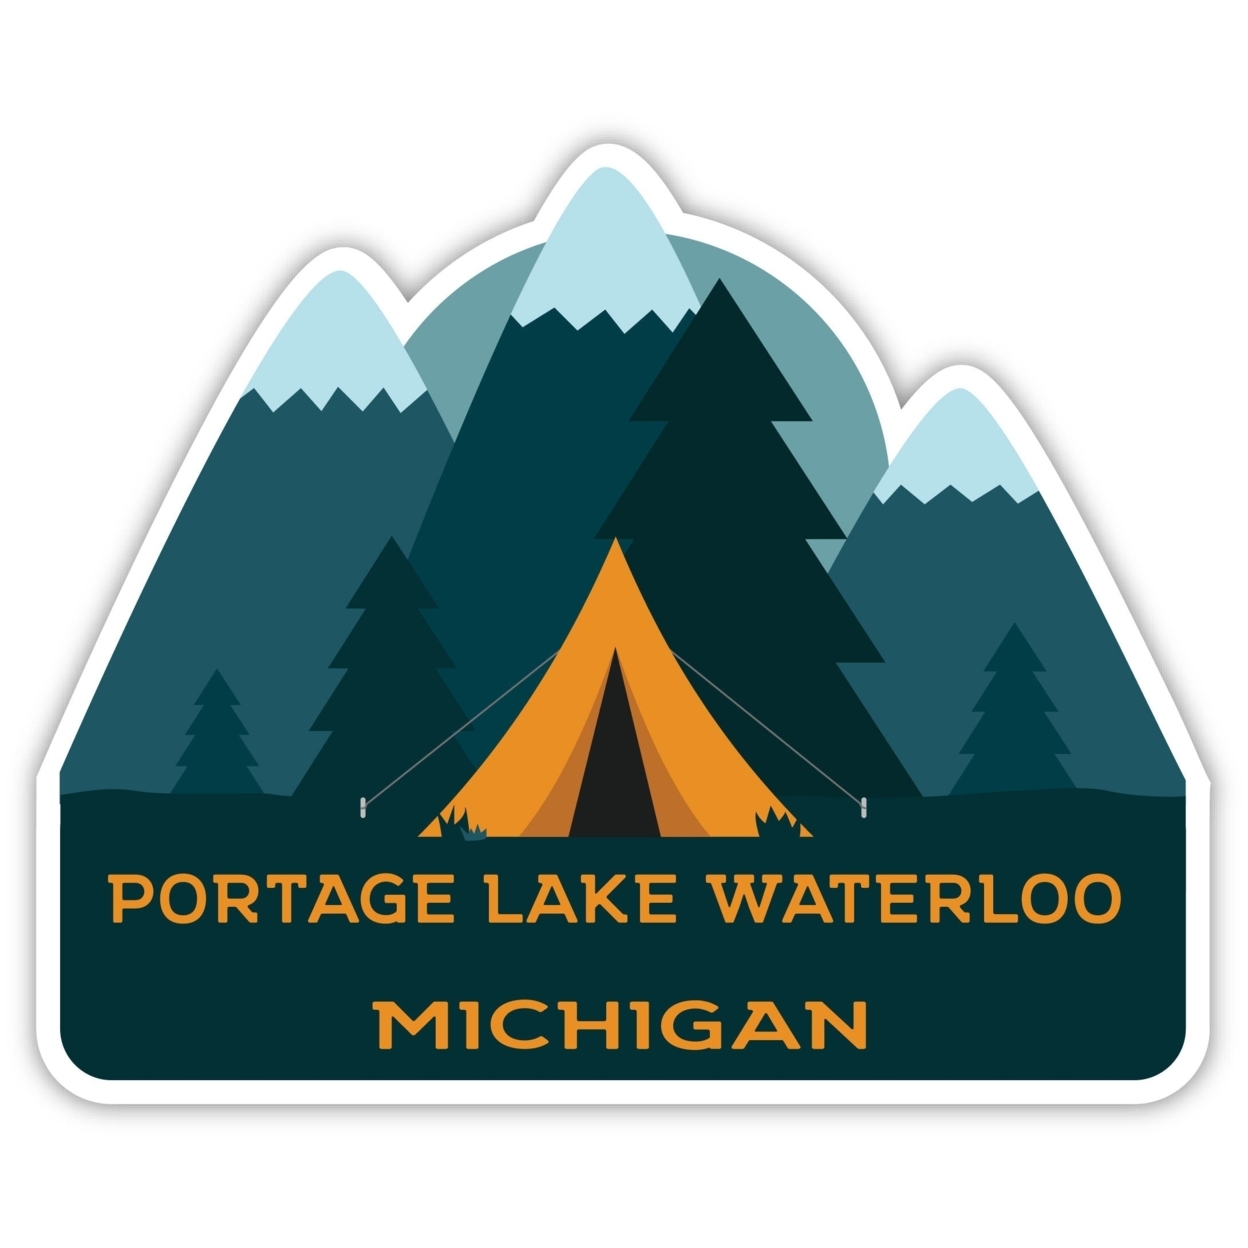 Portage Lake Waterloo Michigan Souvenir Decorative Stickers (Choose Theme And Size) - Single Unit, 4-Inch, Tent